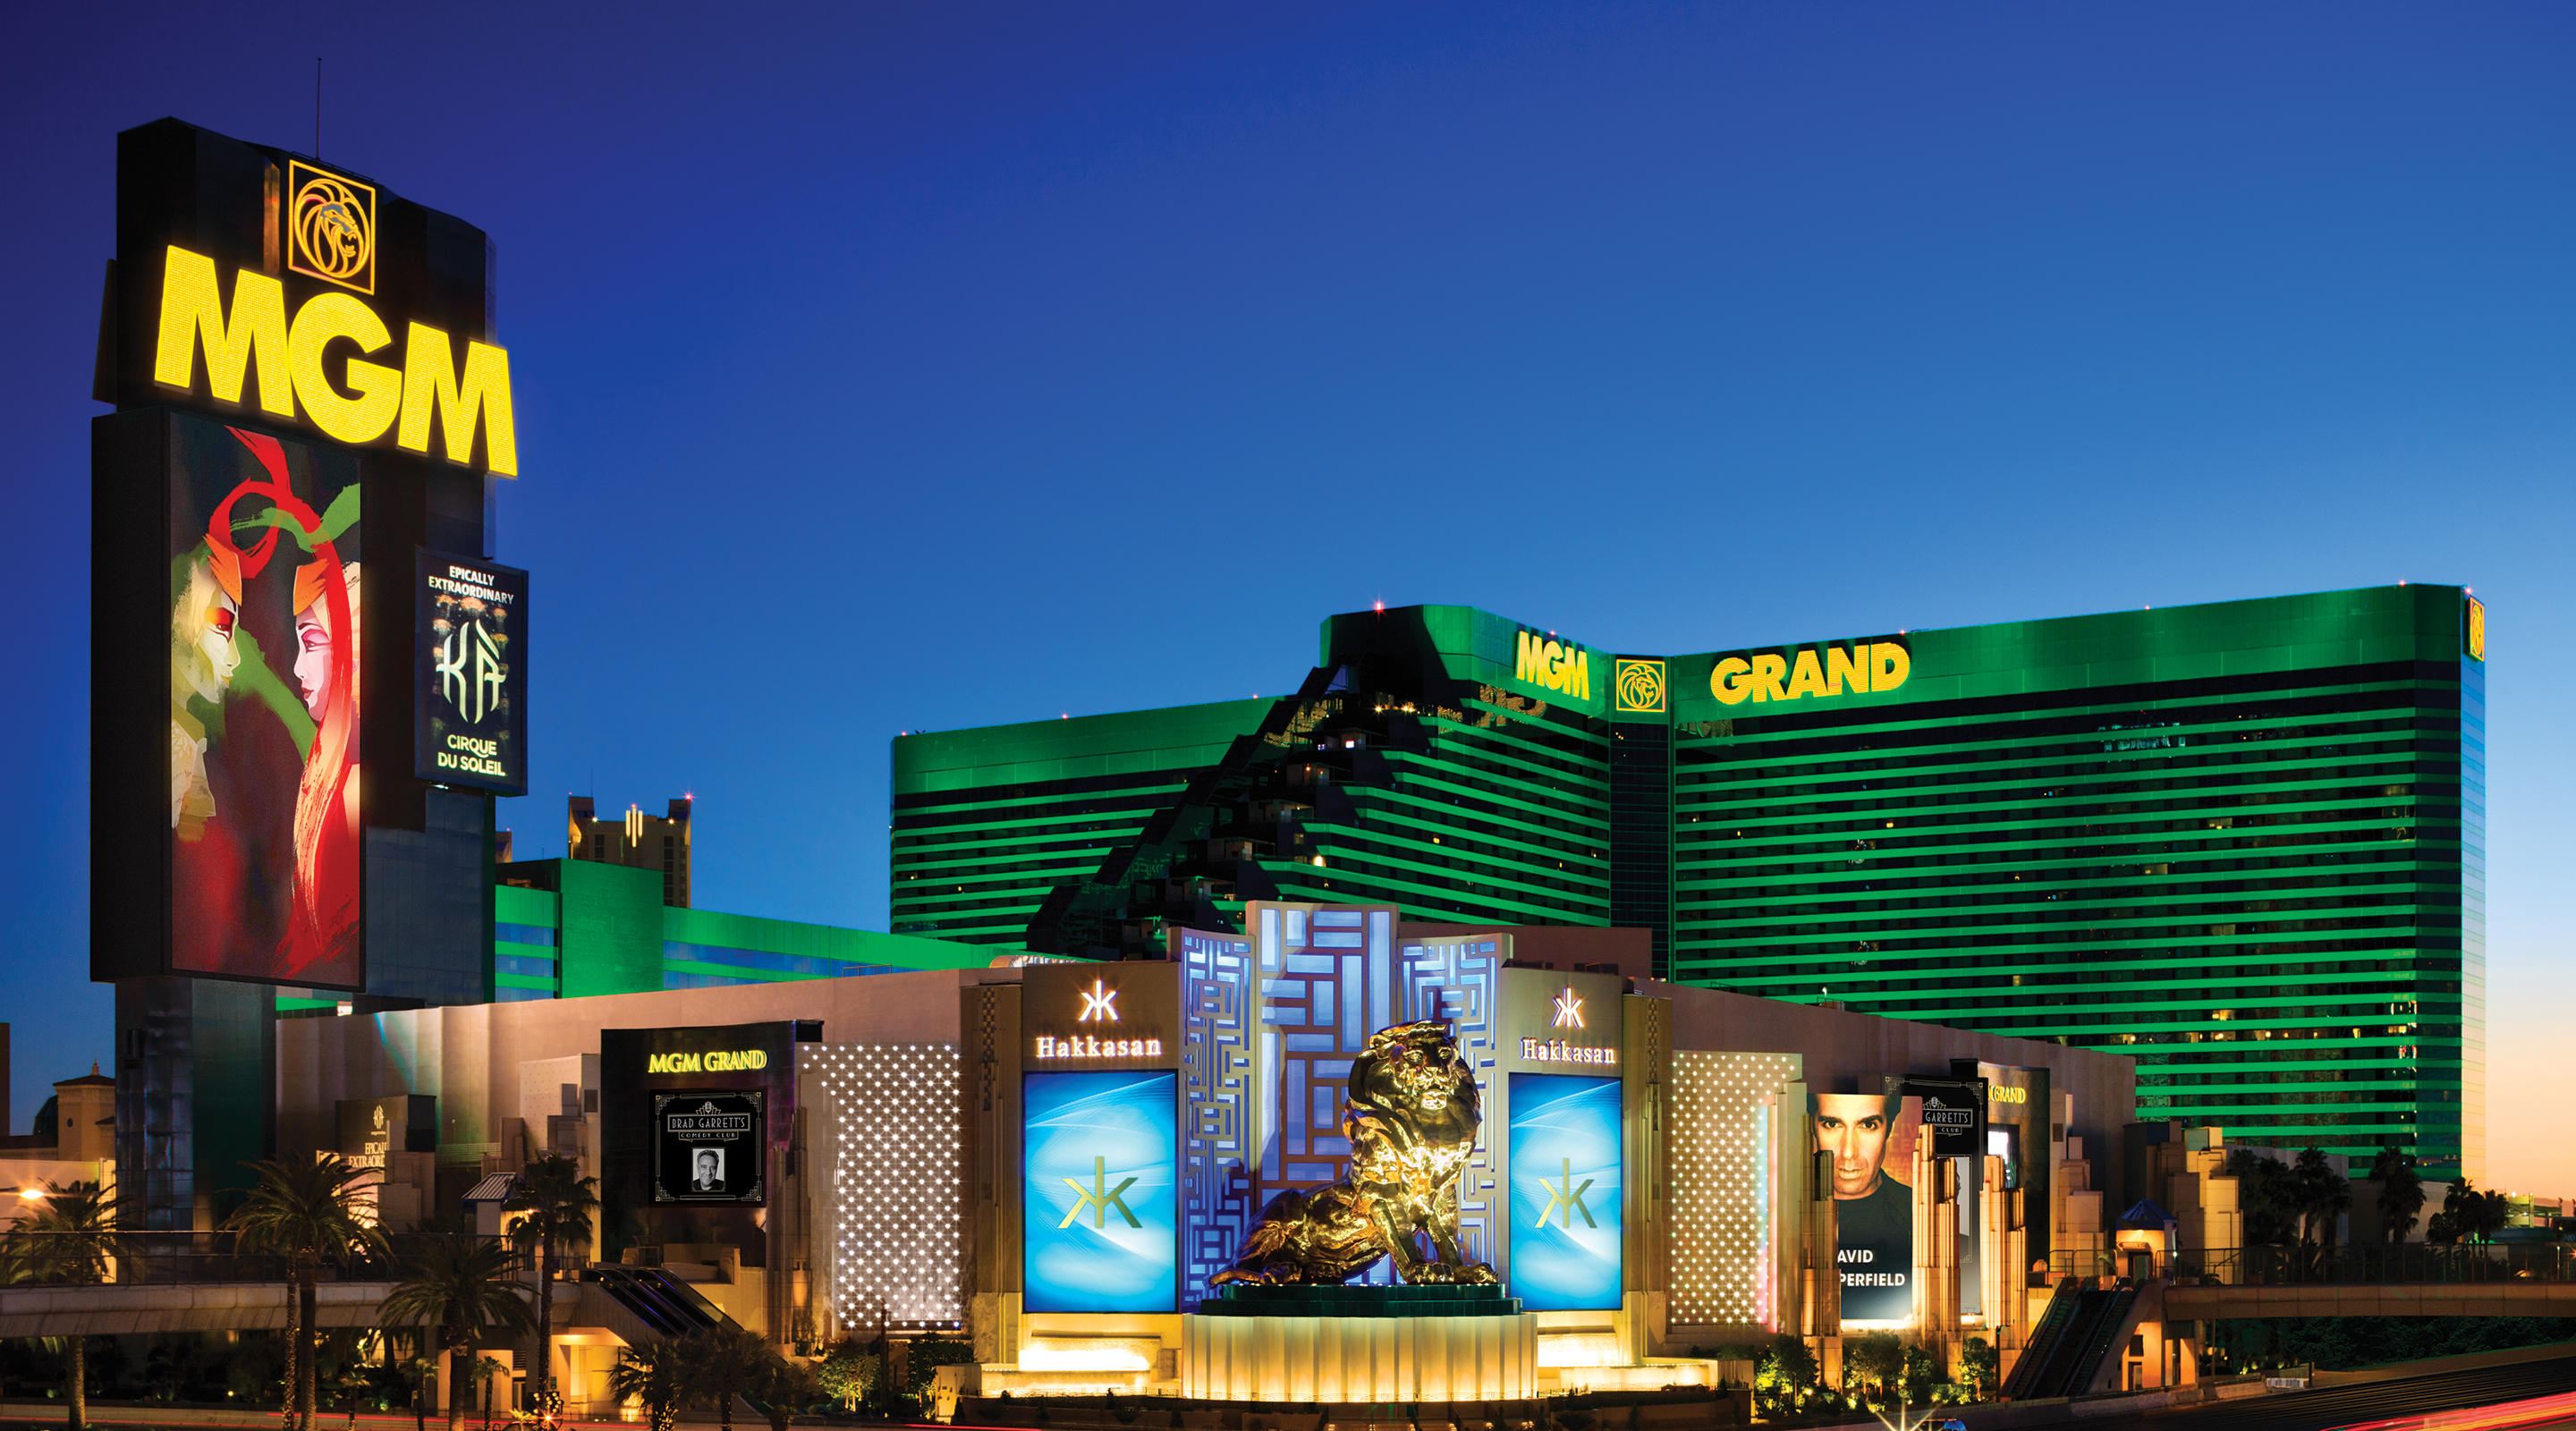 Mgm Grand Las Vegas